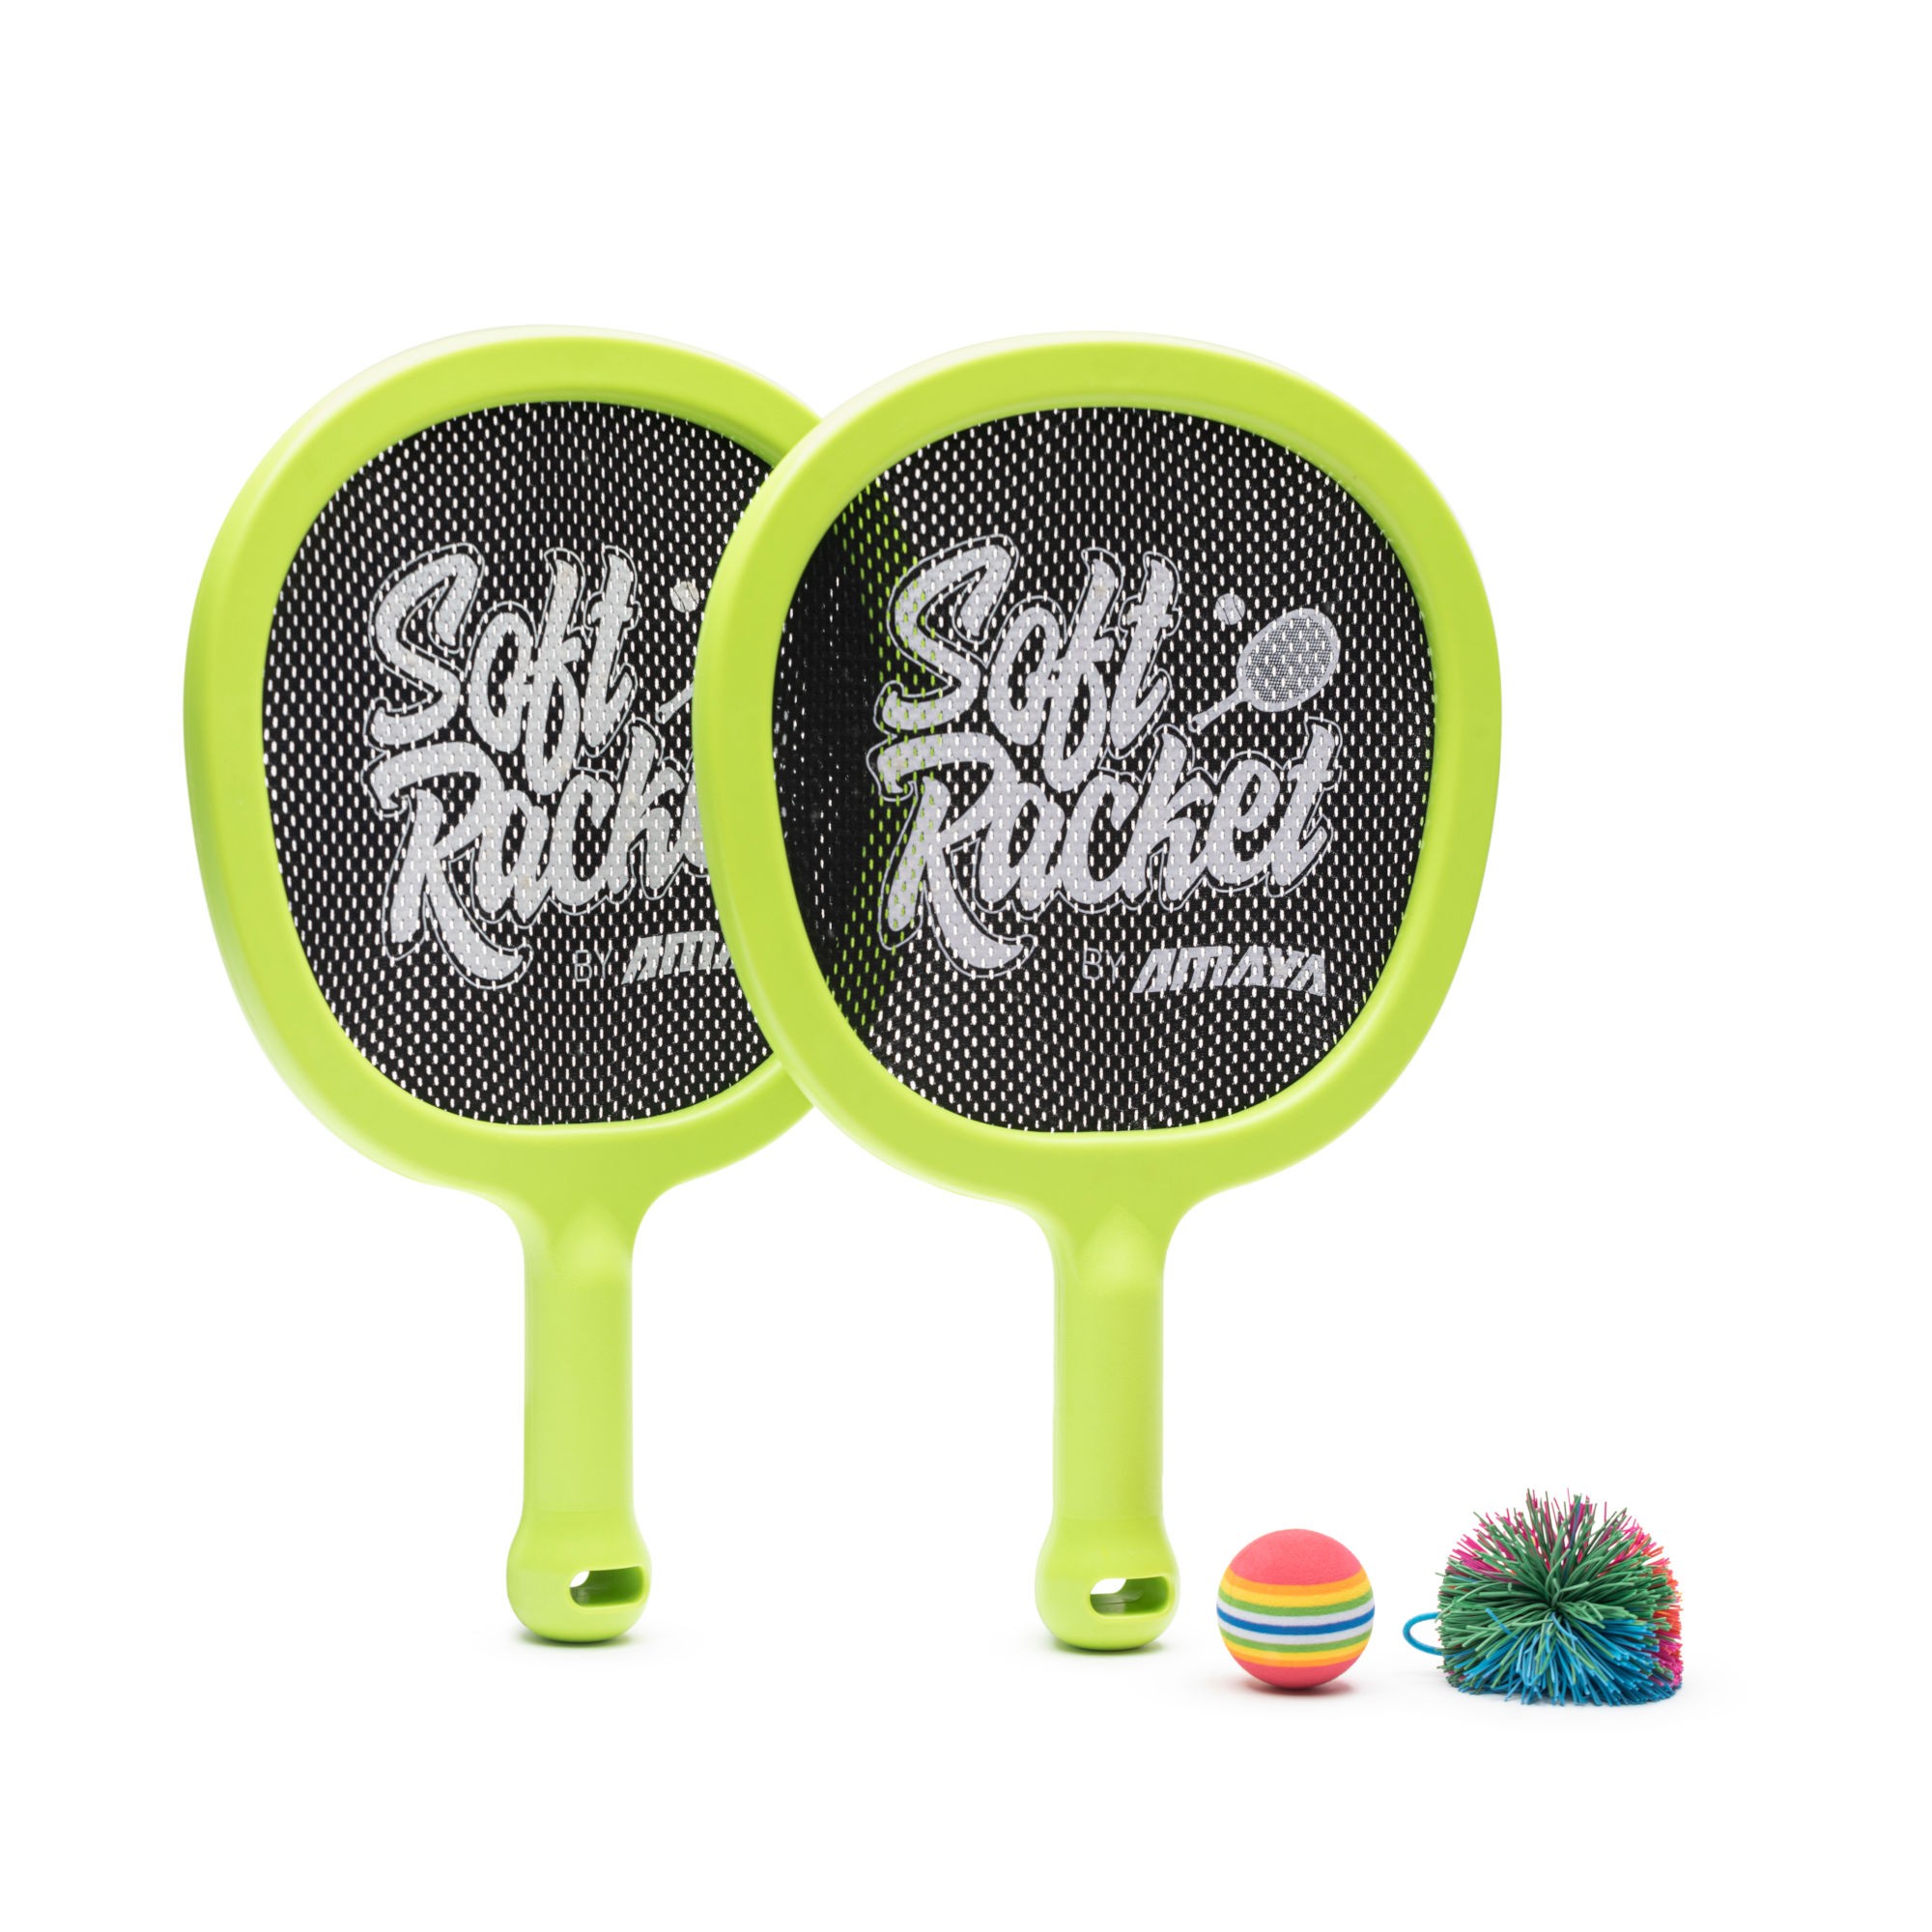 soft-racket-by-amaya-varios-colores